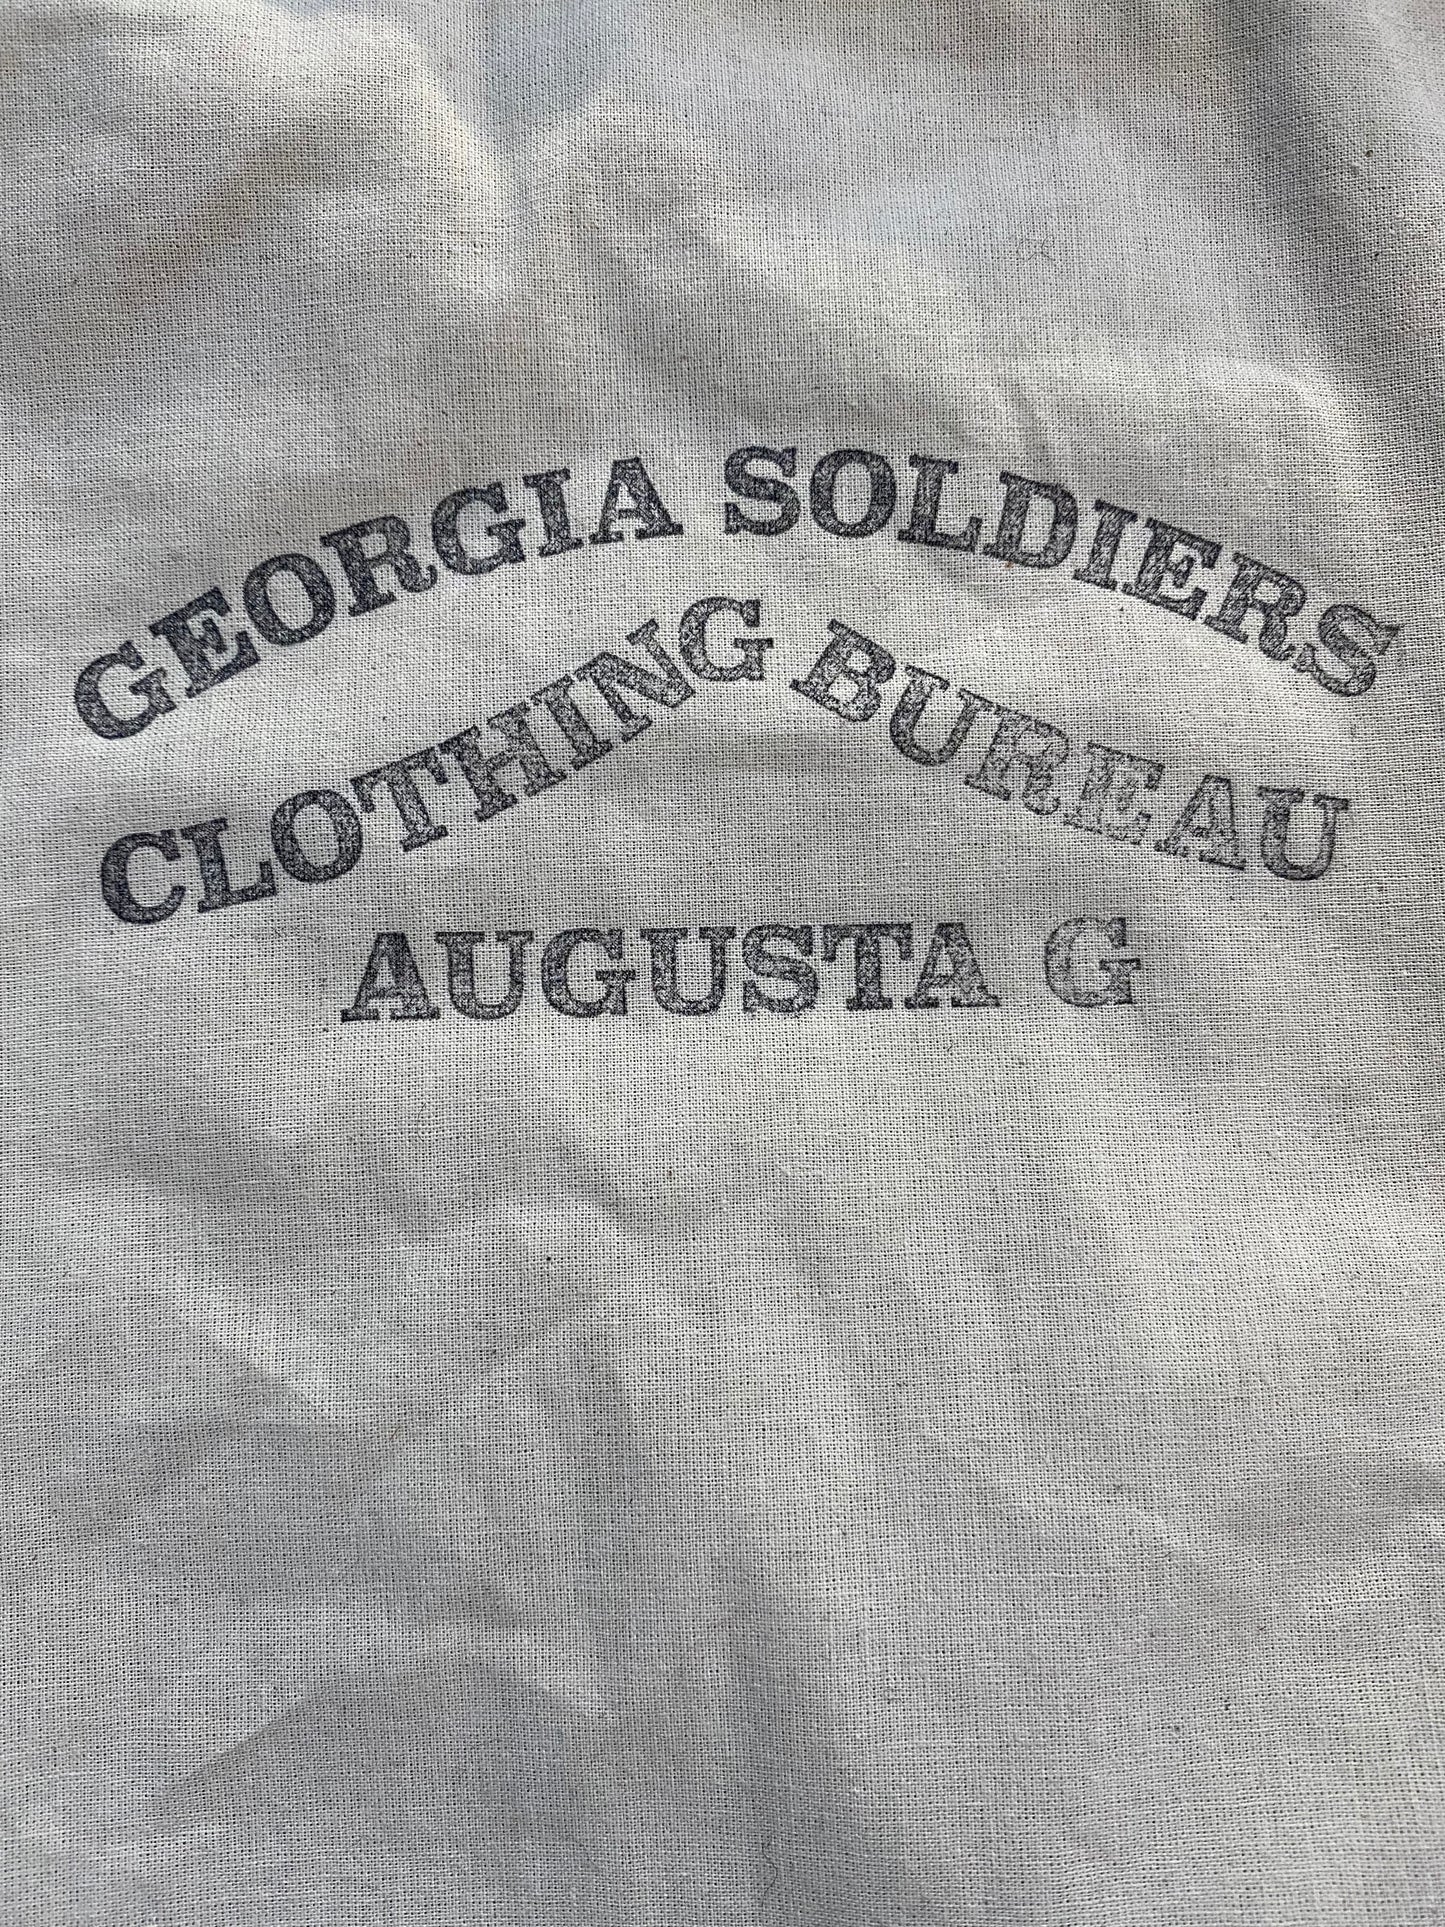 Georgia Soldiers Clothing Bureau Trousers 1862-1865